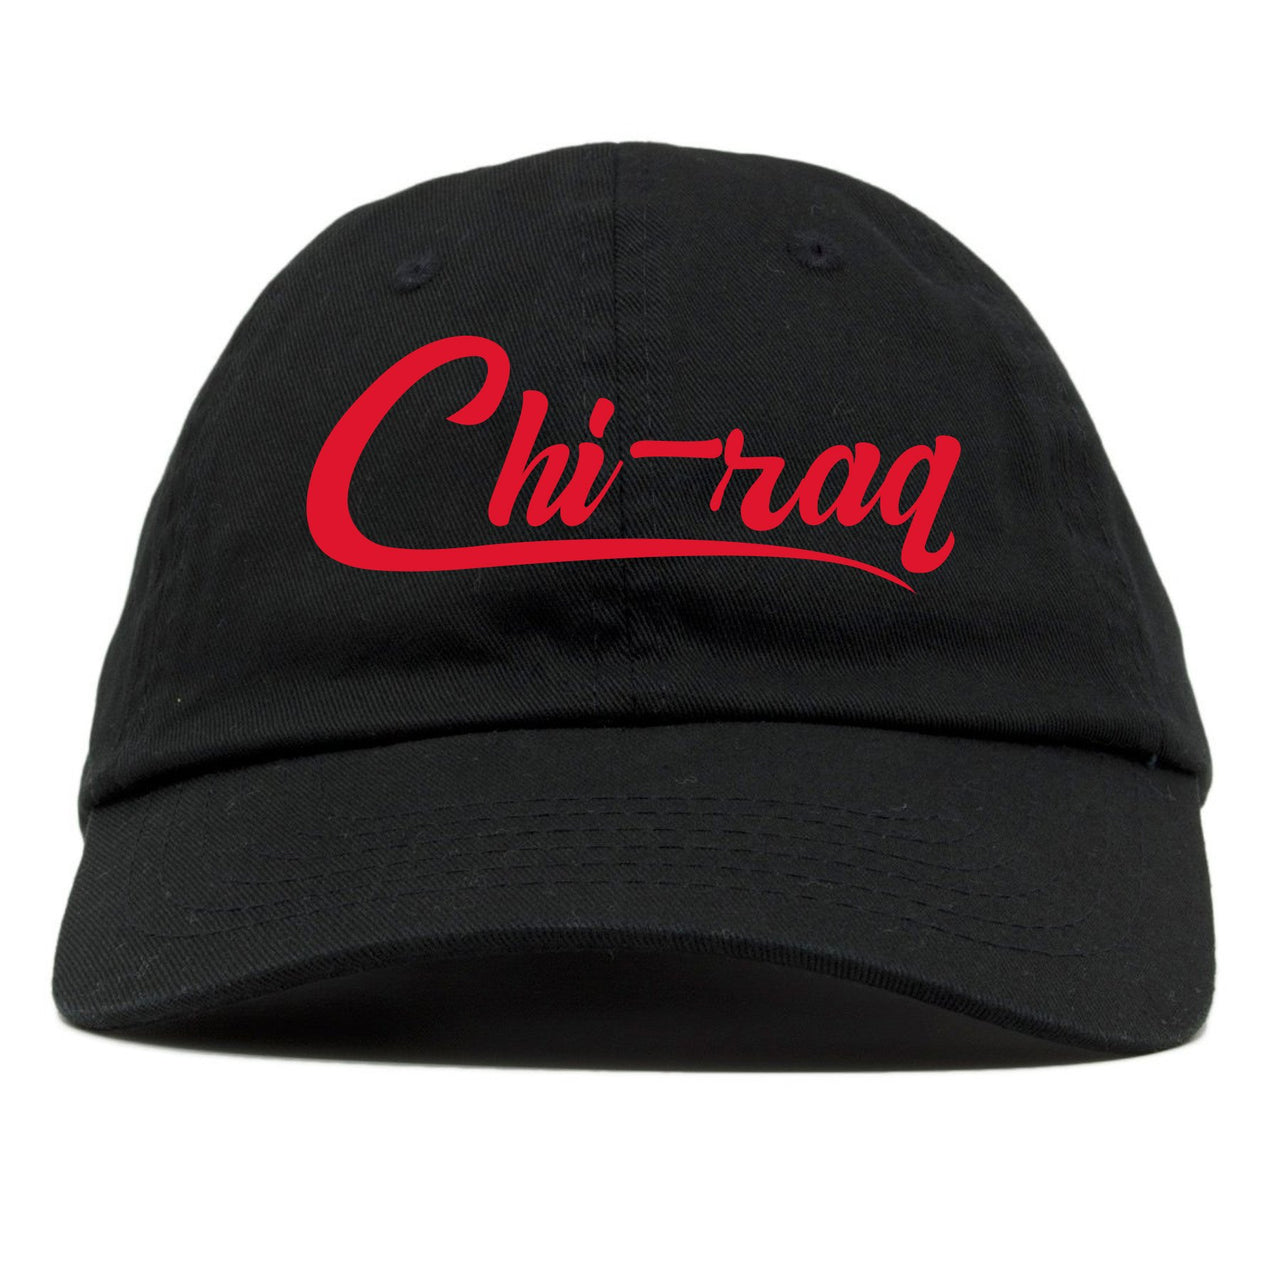 Reflections of a Champion 7s Dad Hat | Chiraq Script, Black